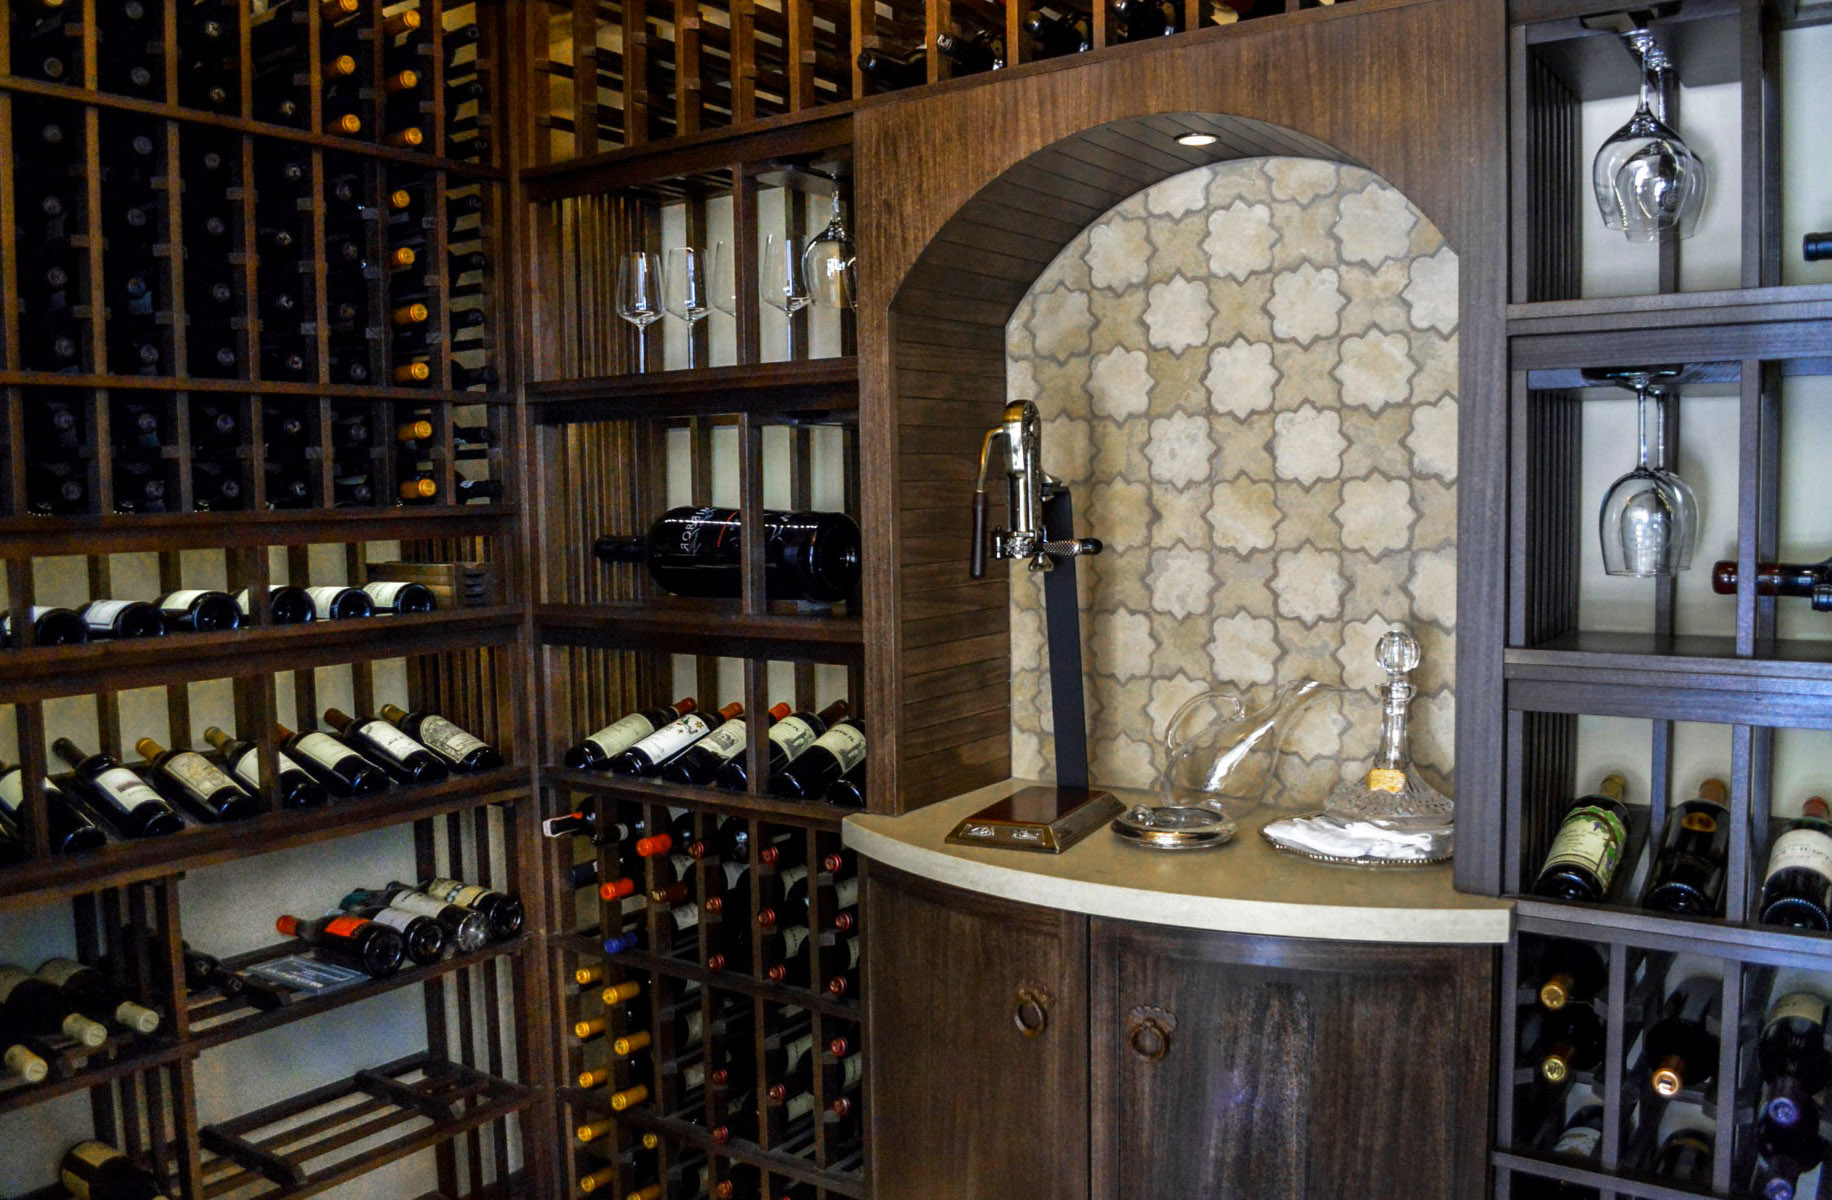 Wine Cellar Ideas Designers Gallery